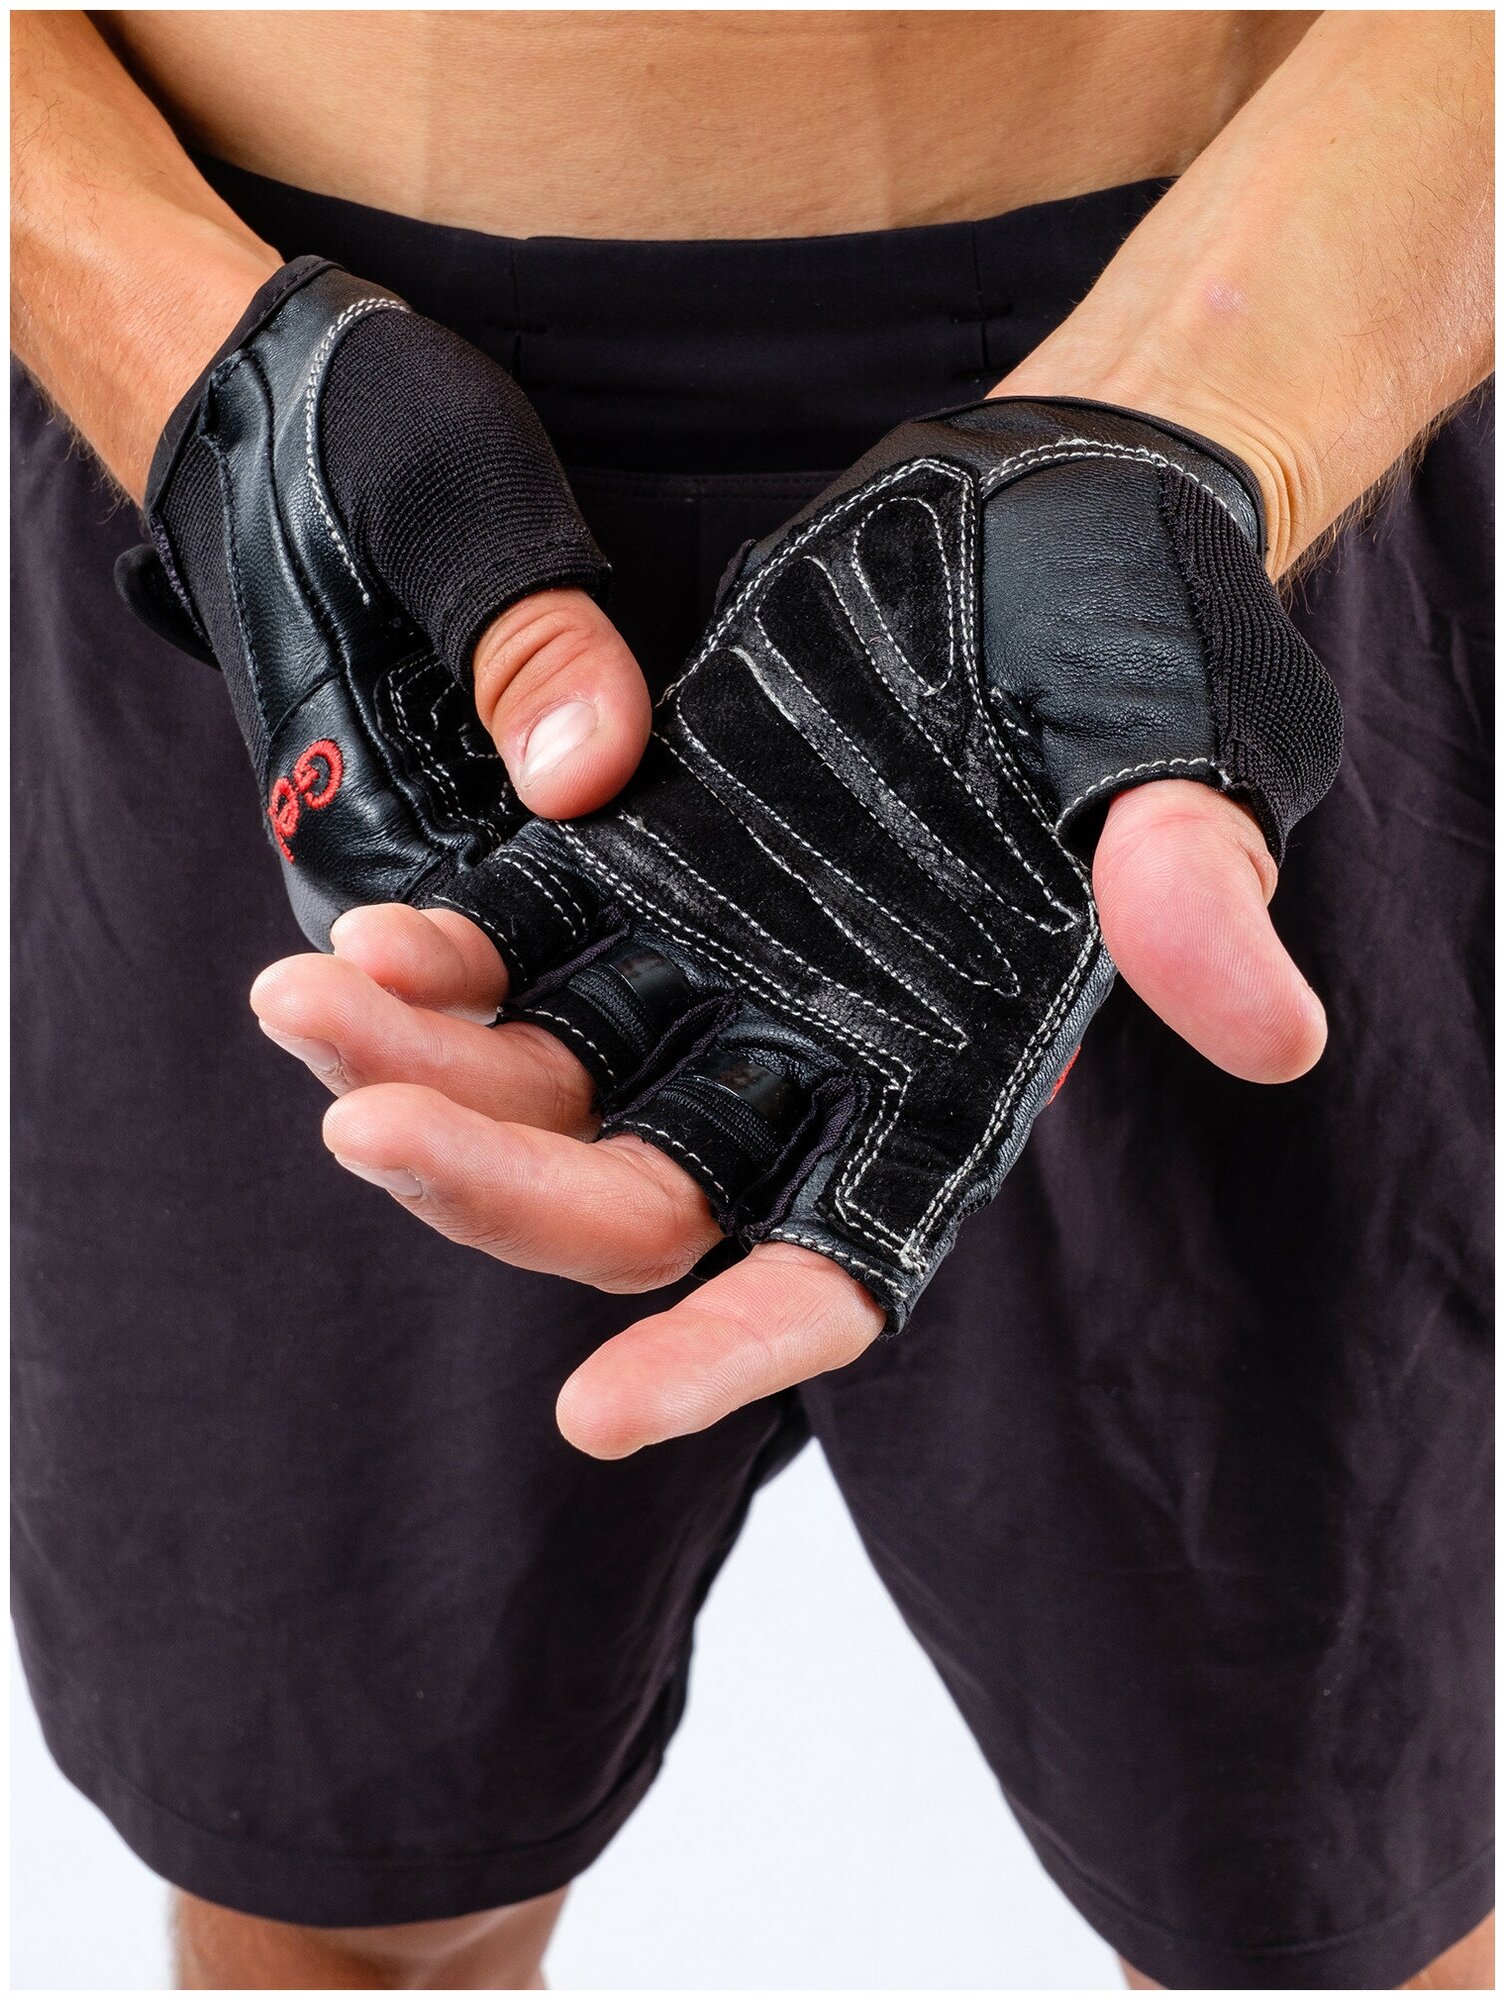 Перчатки для занятий спортом Torres Pl6049m, размер M (m)